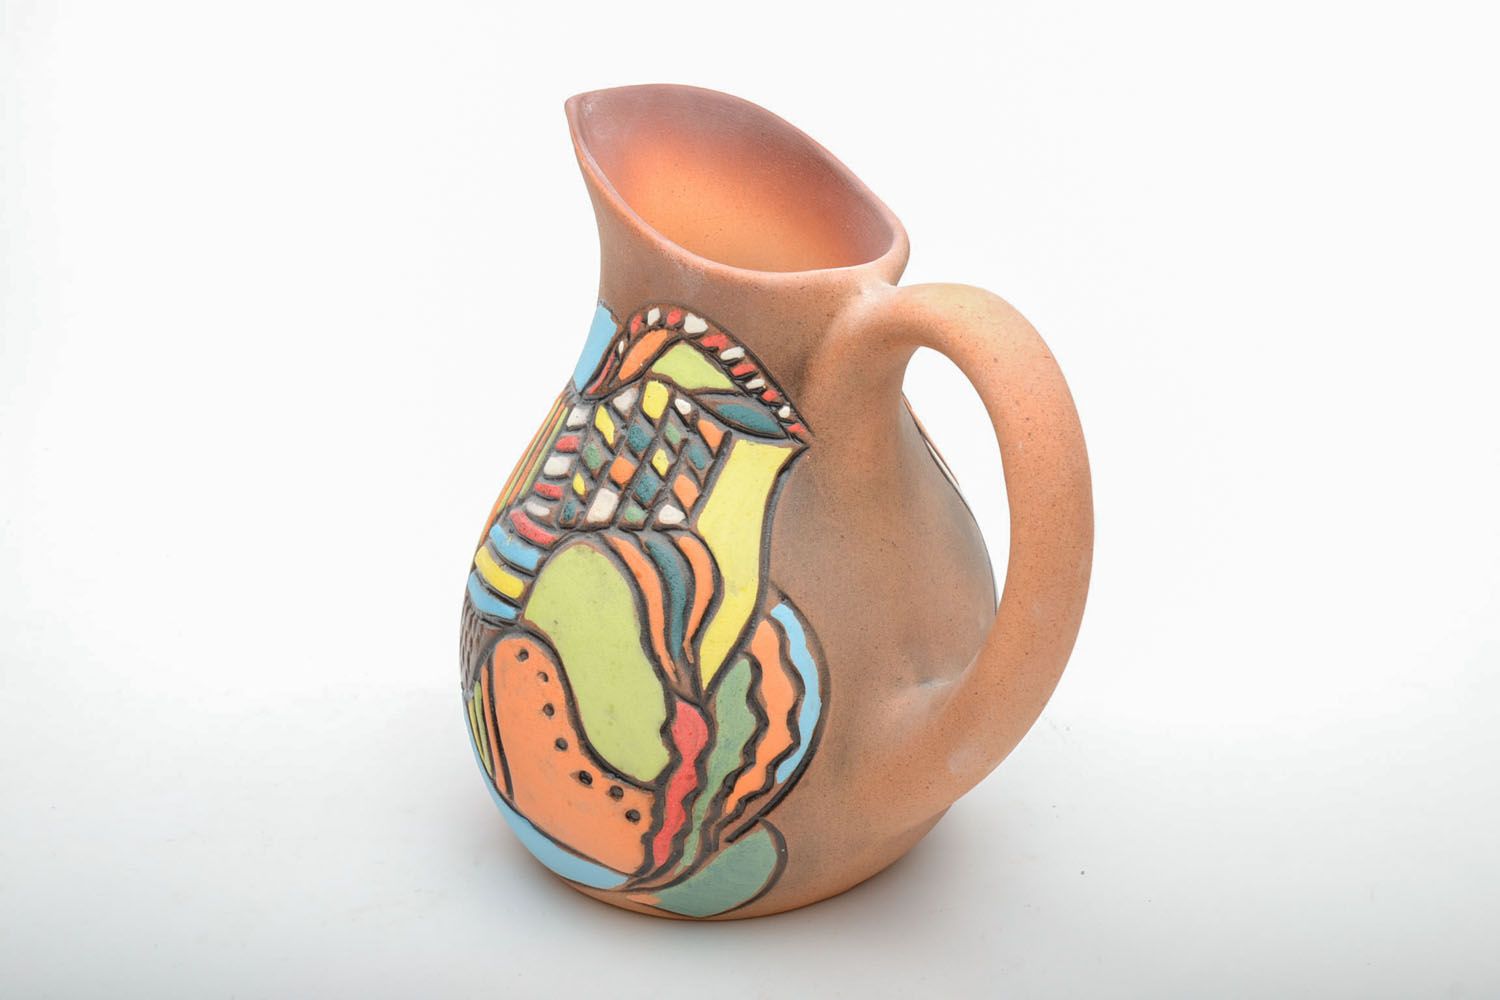 30 oz handmade ceramic classic style water pitcher 1,6 lb photo 4